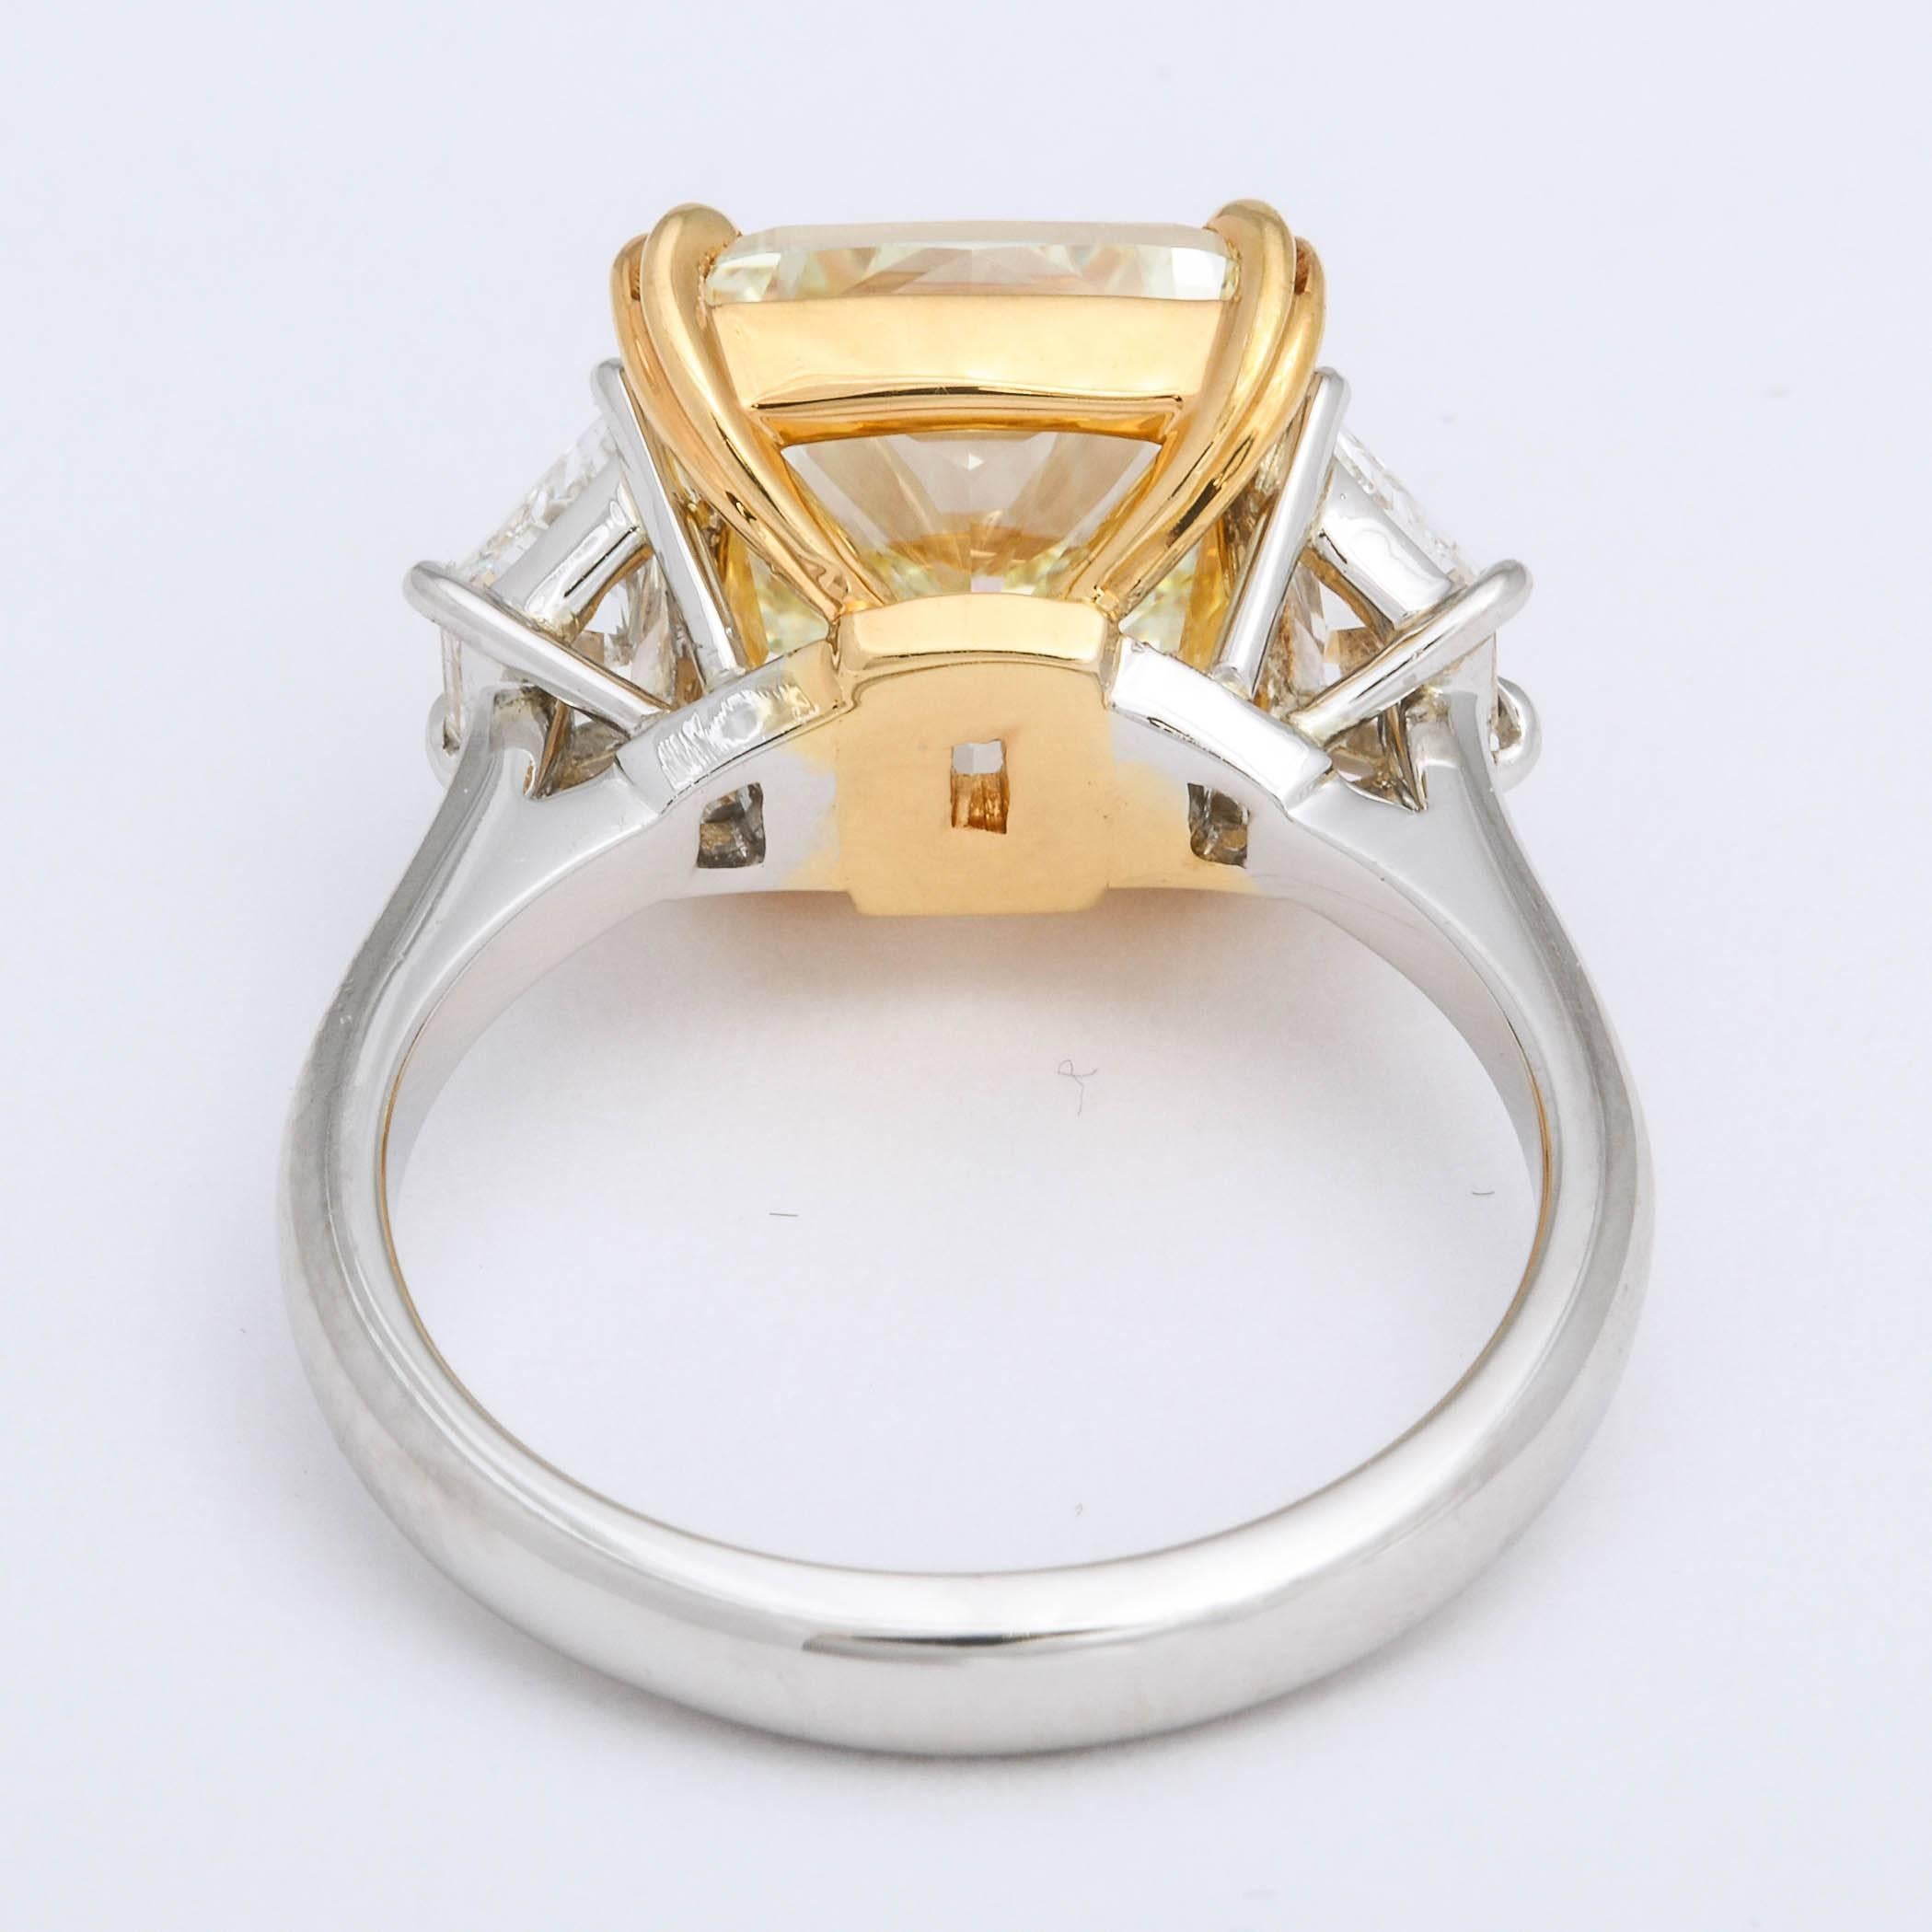 6 carat canary diamond ring